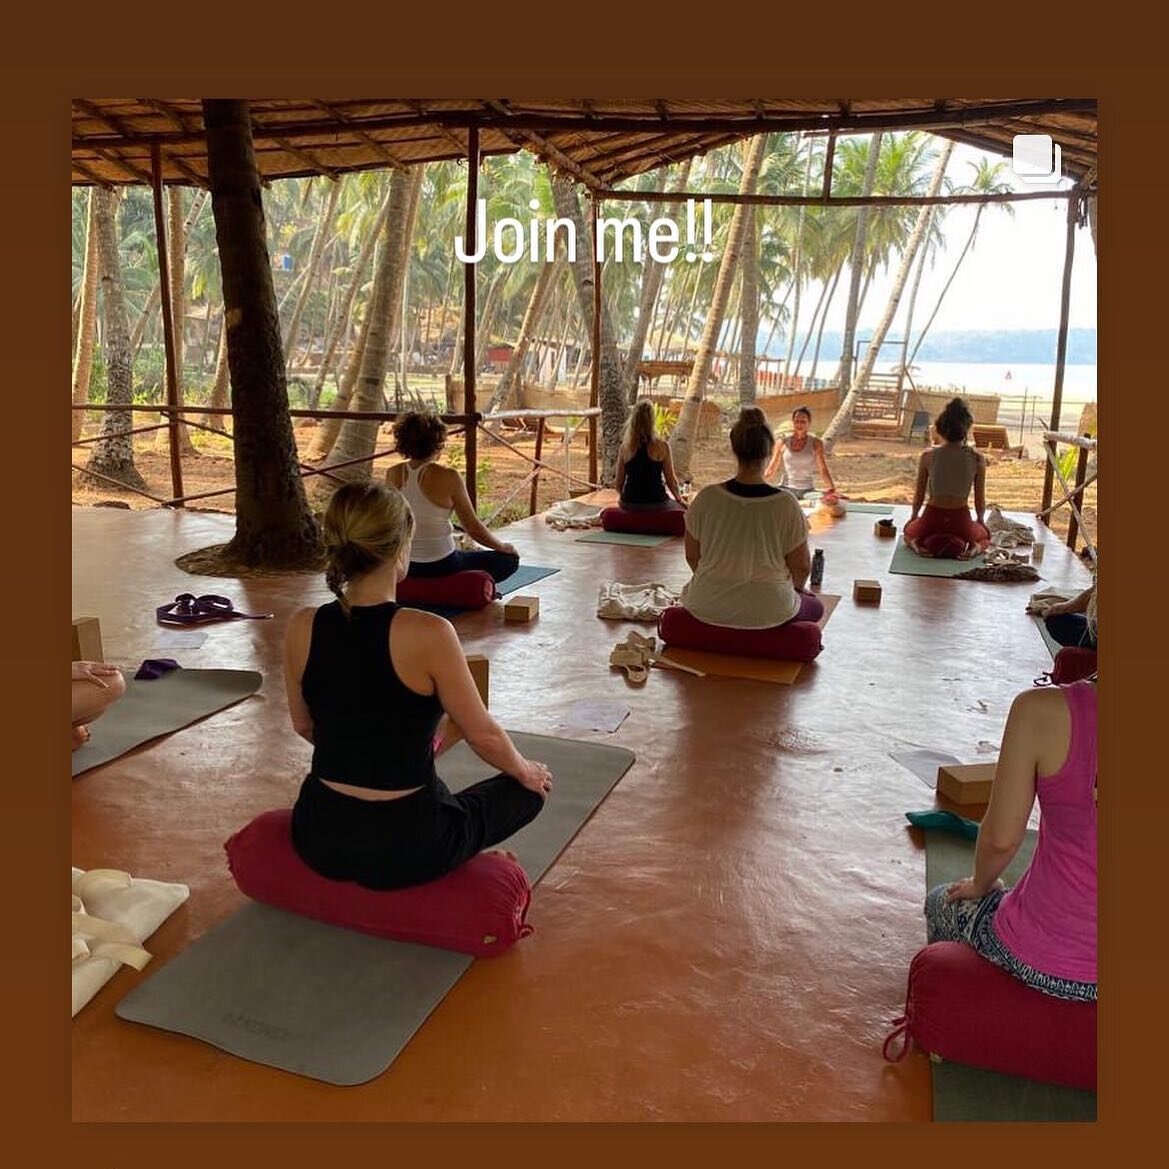 Yoga Retreat in Goa, India is booking now!

@caboserai 
@yoasyogaretreats